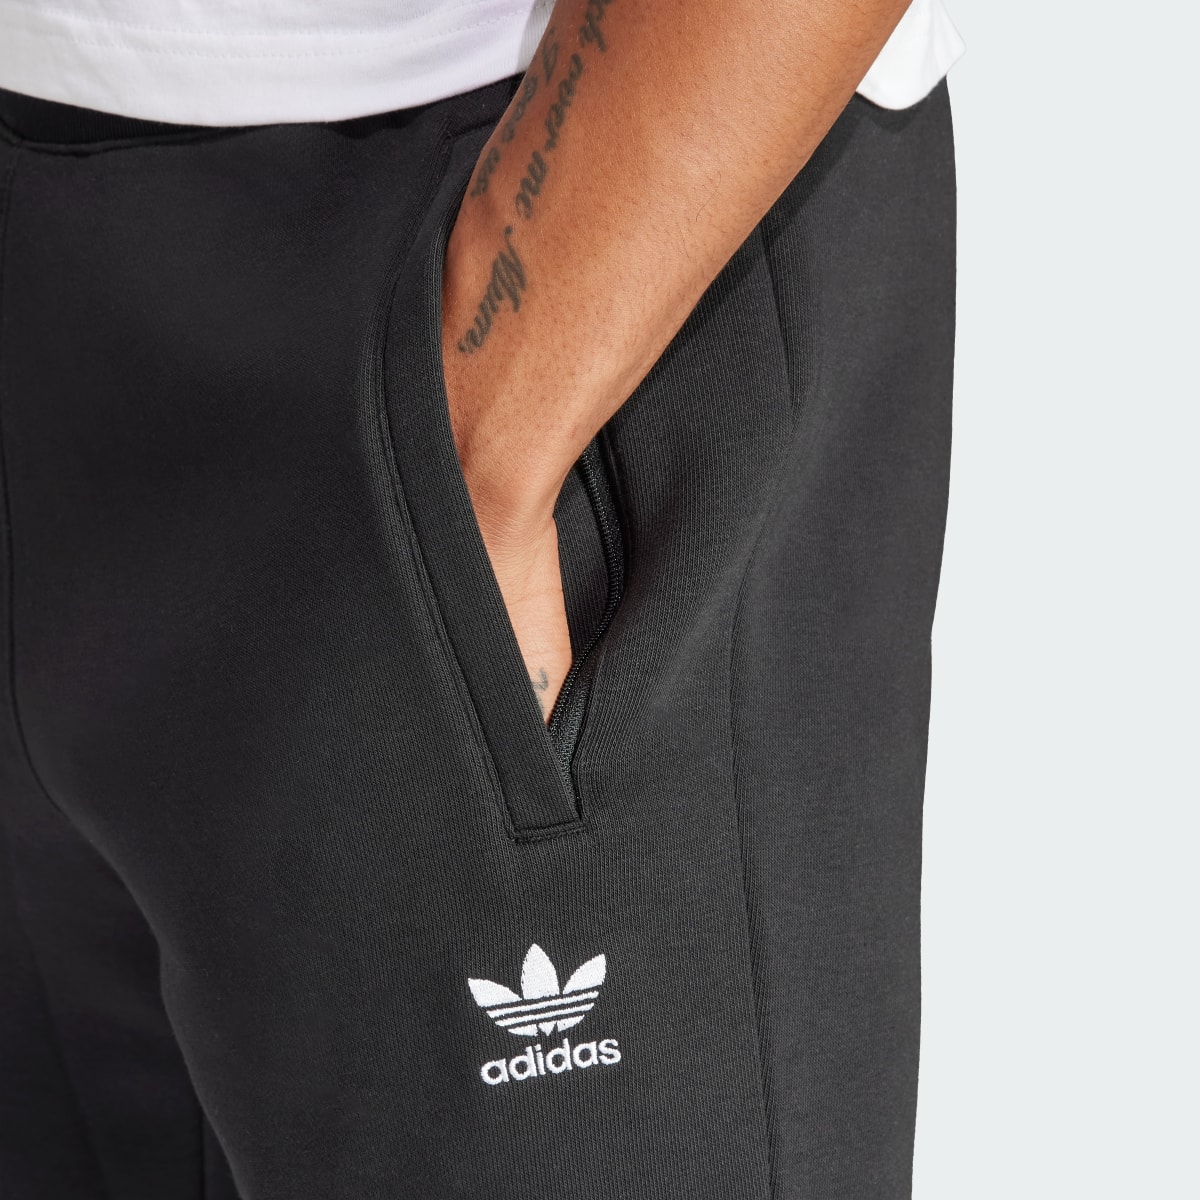 Adidas Trefoil Essentials Pants. 4